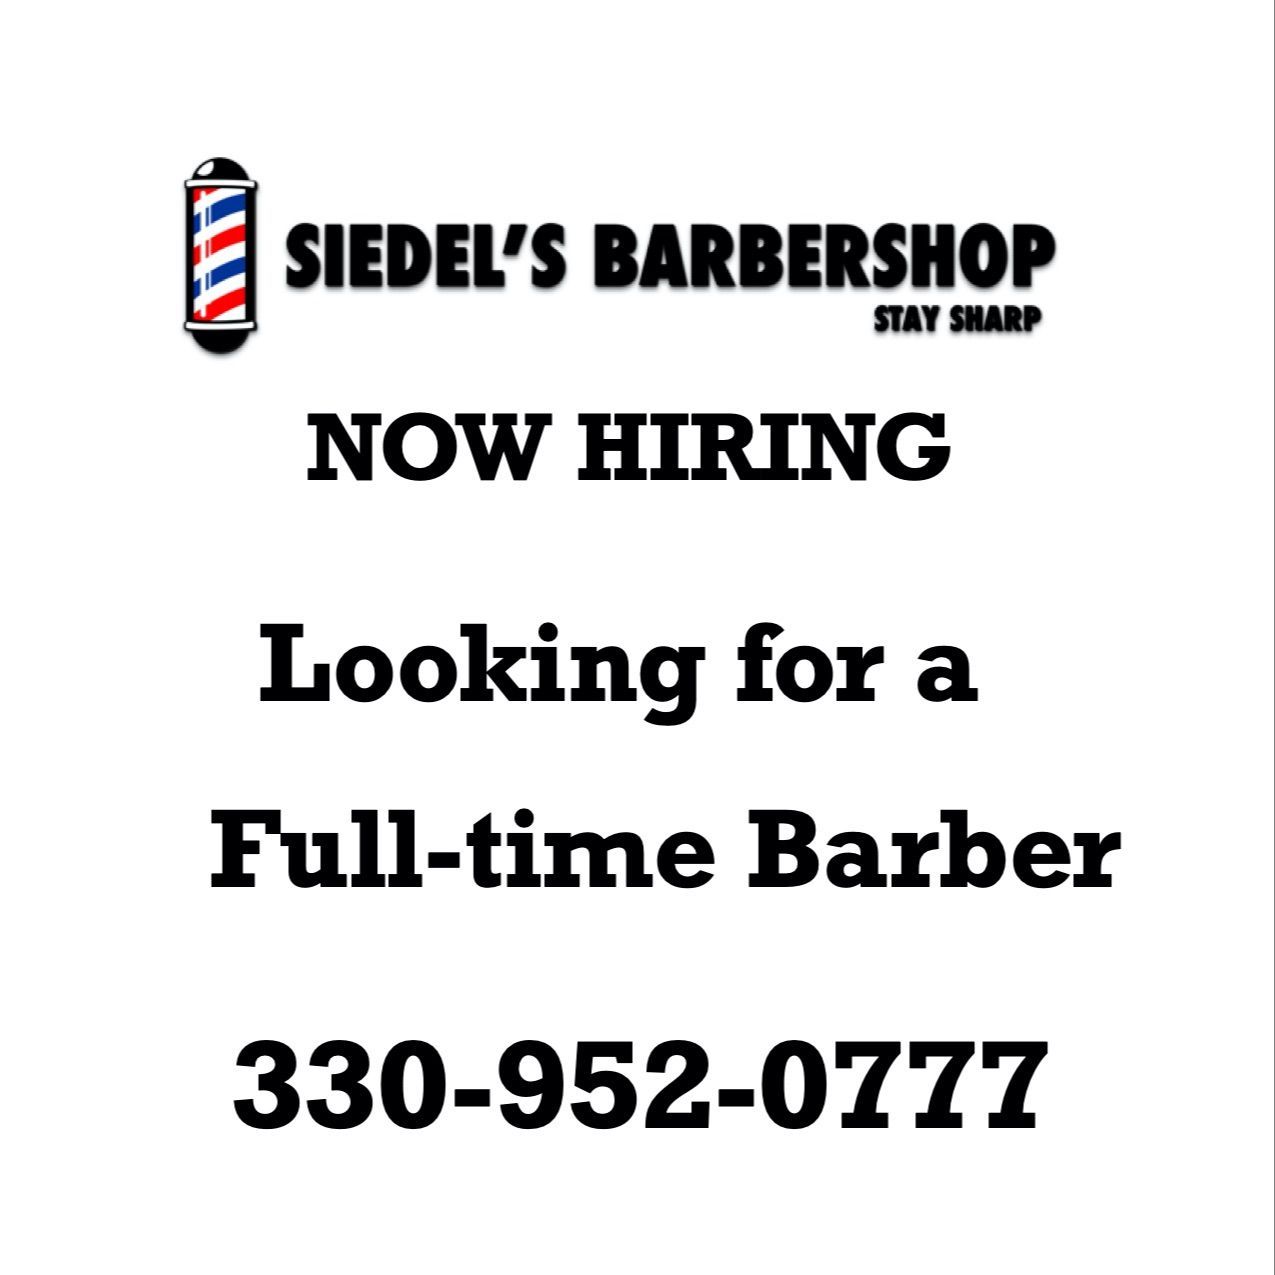 Siedel's Barbershop, 982 N Court St, Medina, 44256